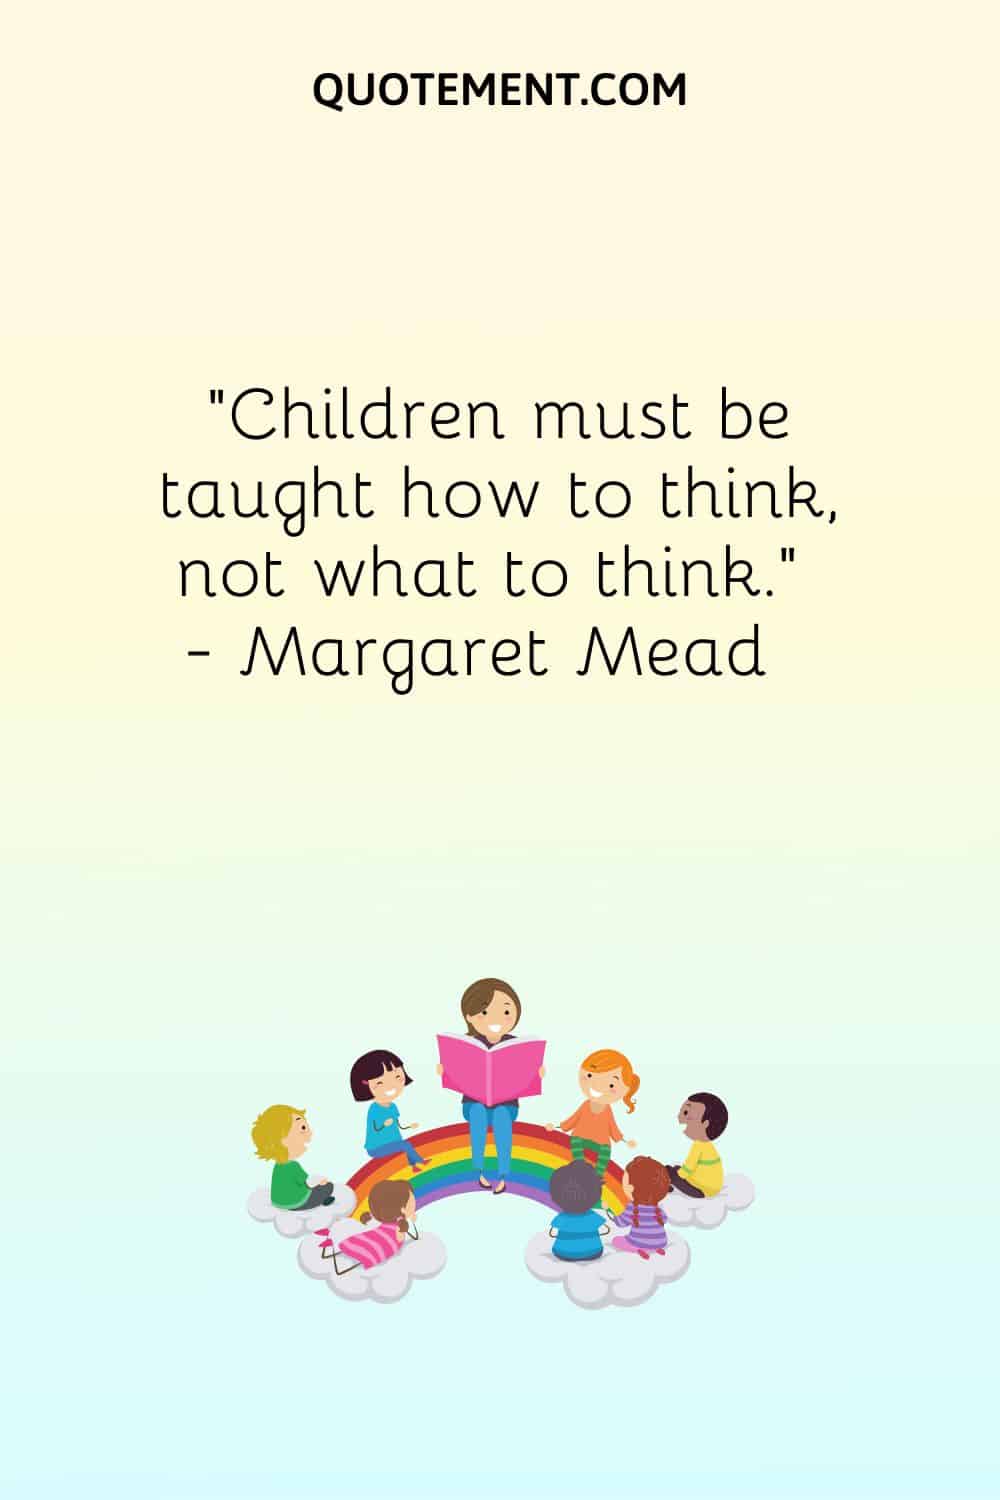 children sitting on a rainbow illustration representing kindergarten quote